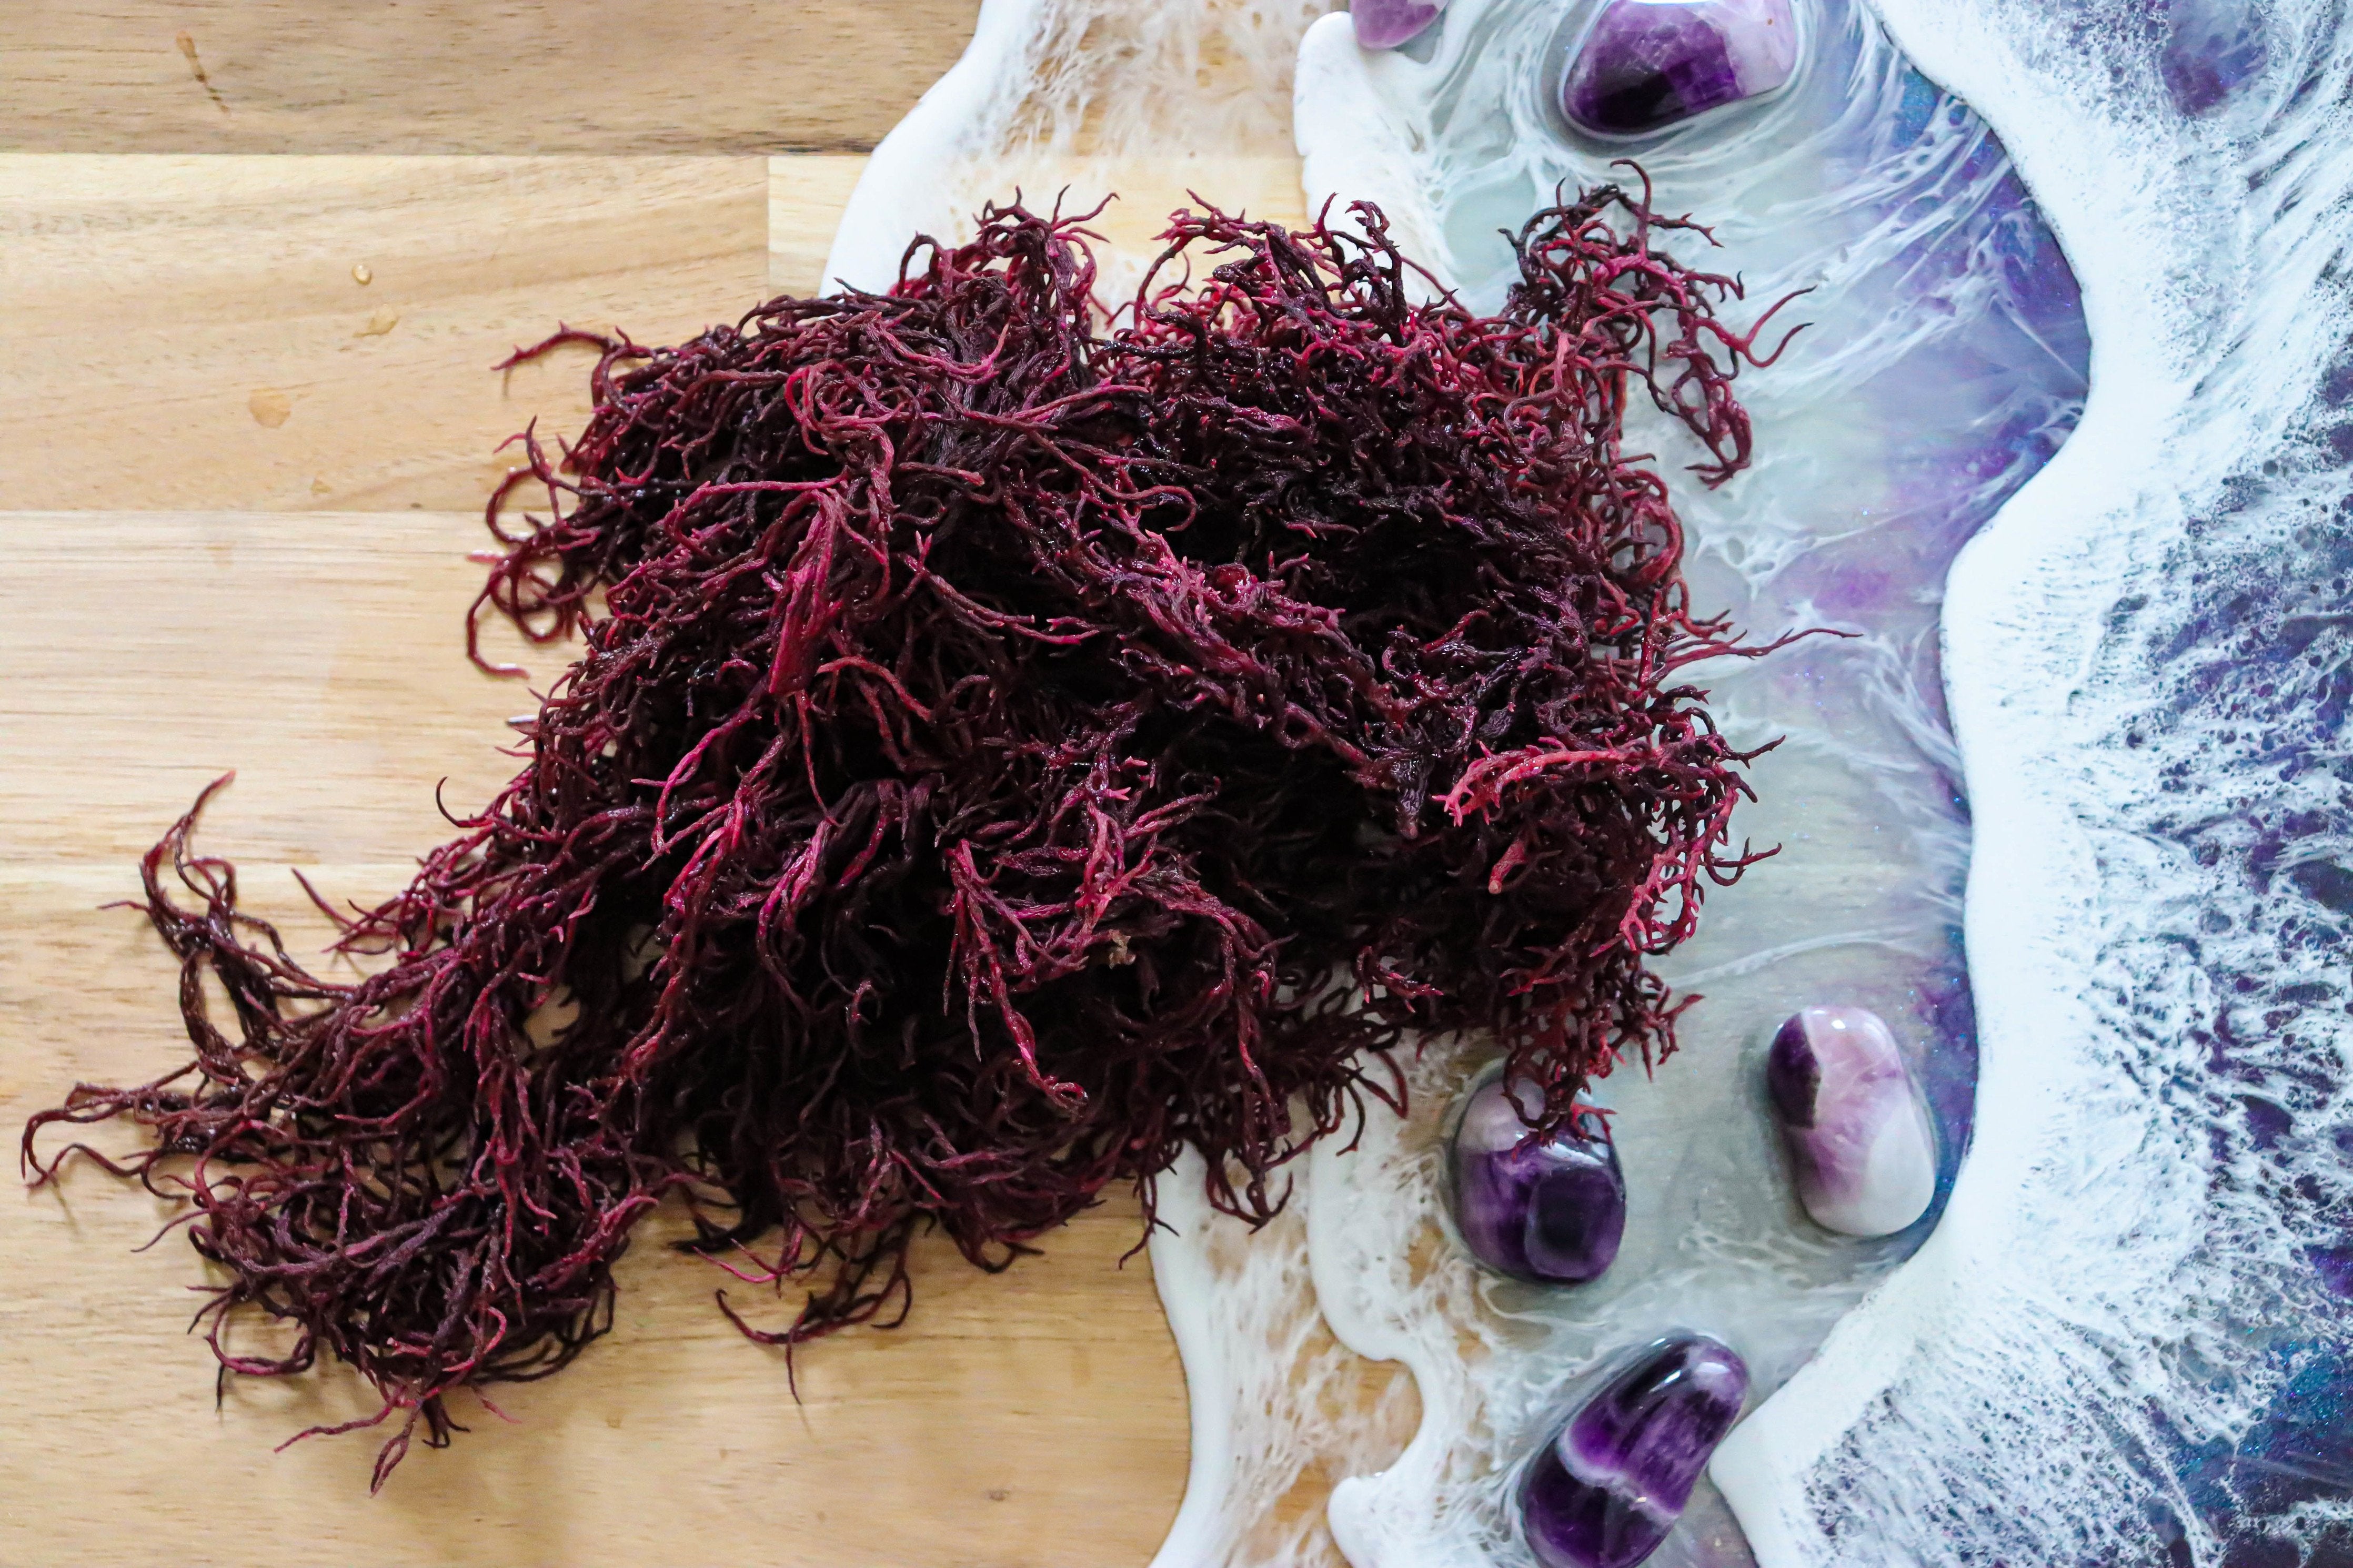 70g Purple St Lucia Sea Moss - Gracilaria - St Lucia Sea Moss Organic Buy UK 